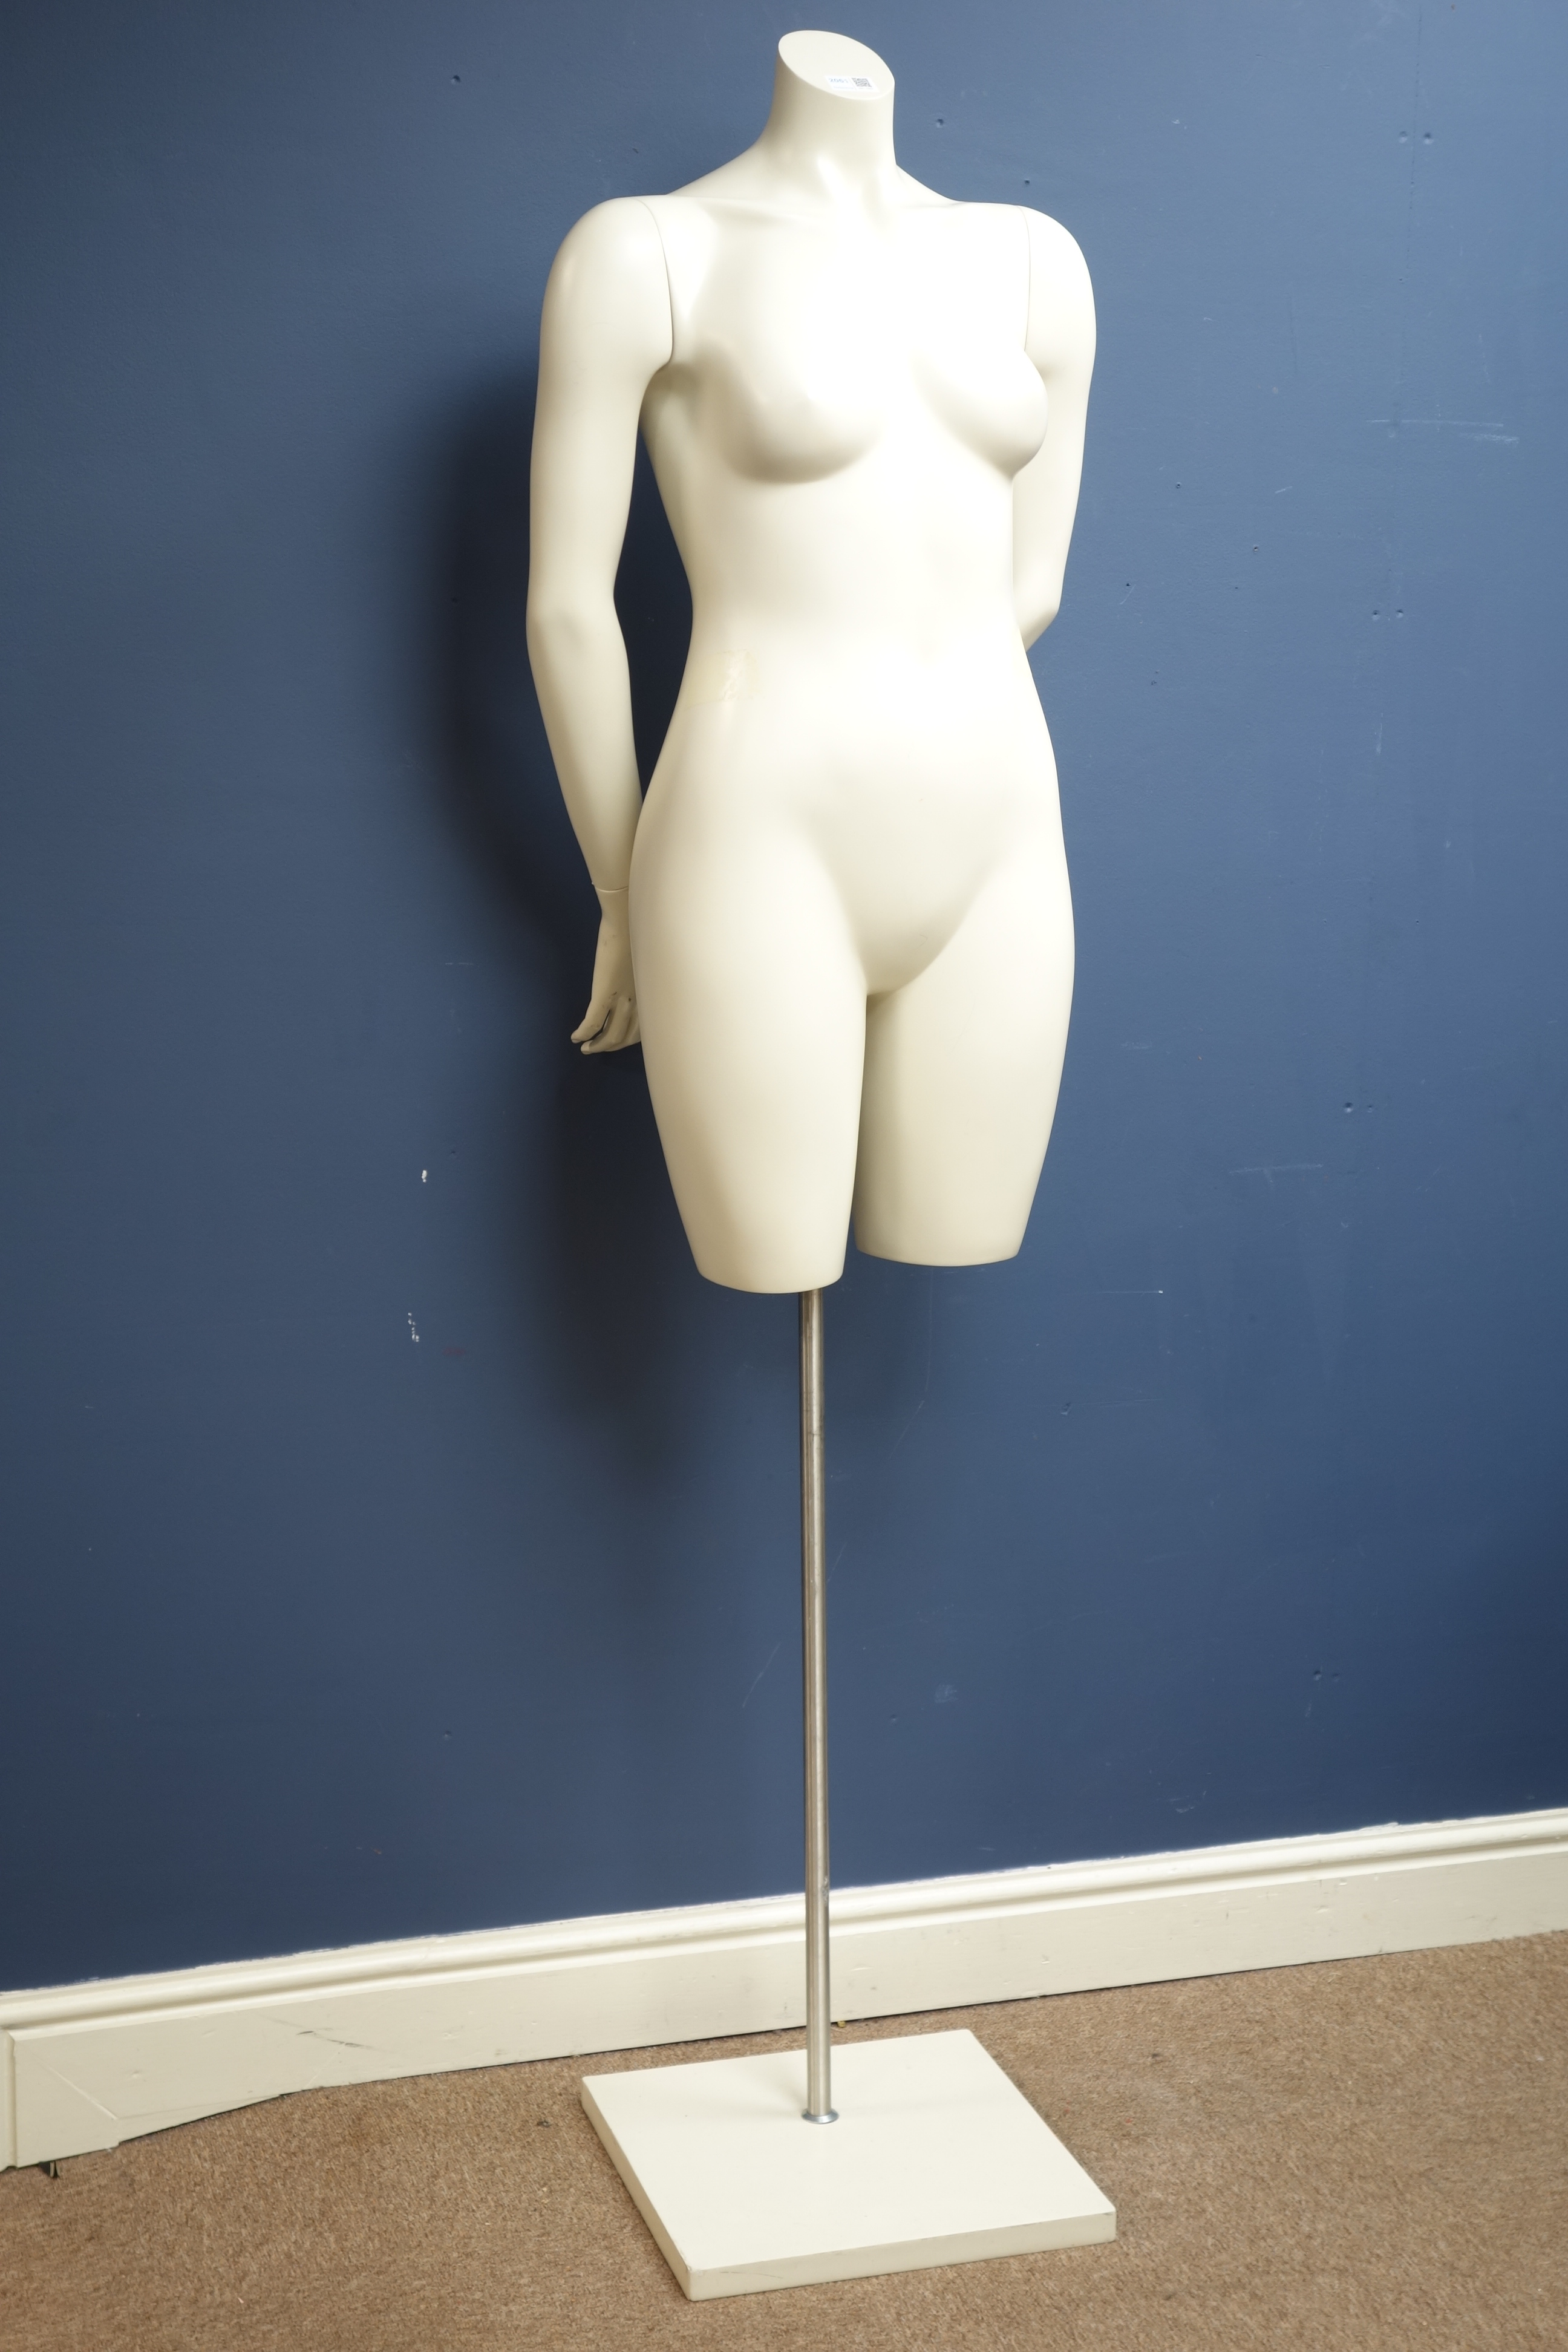 Half female adjustable mannequin on stand